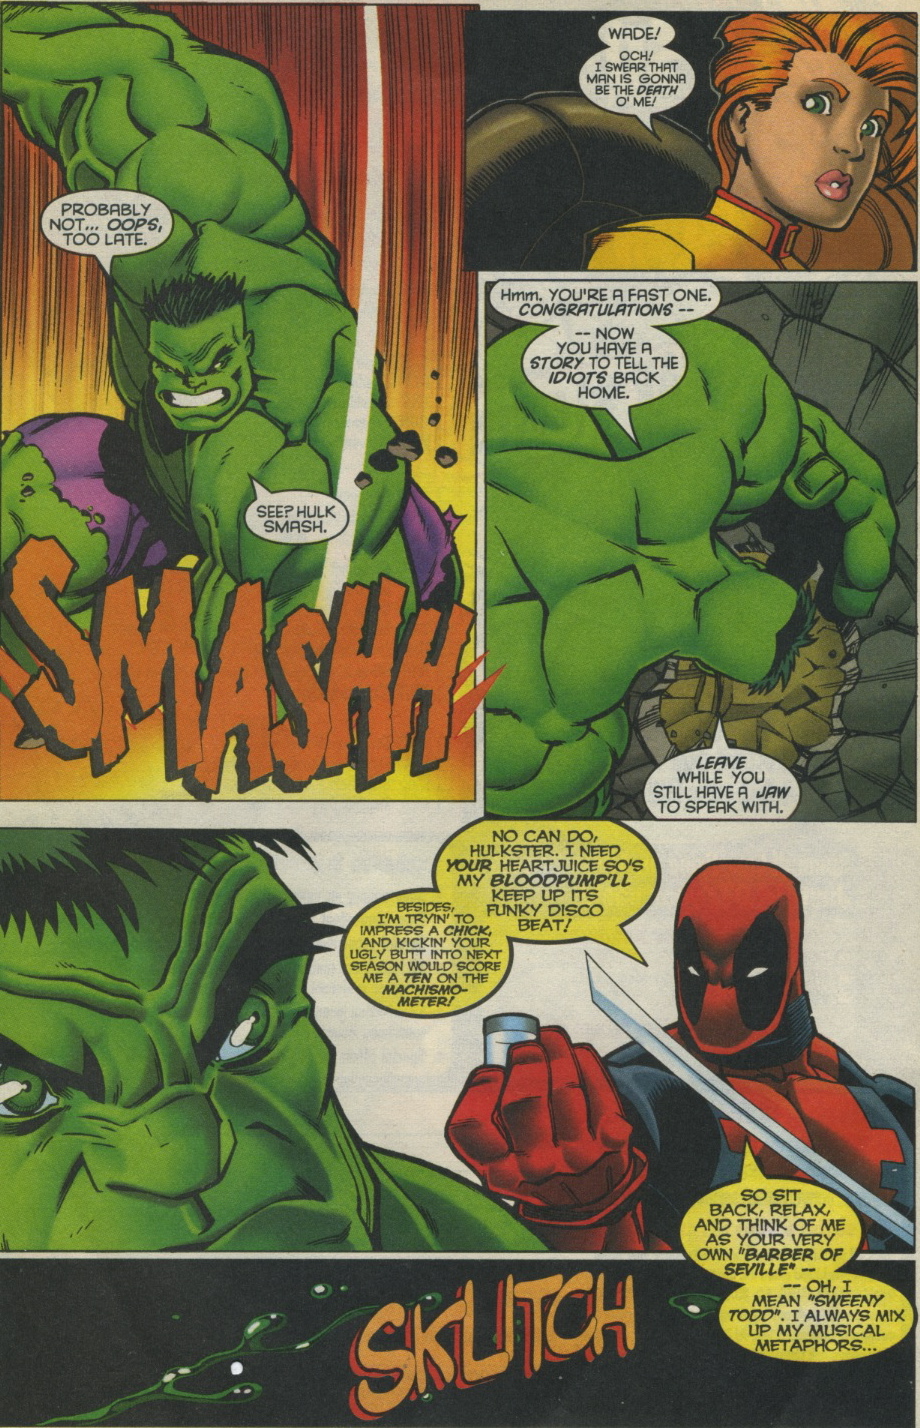 Deadpool Vs. Hulk HD wallpapers, Desktop wallpaper - most viewed